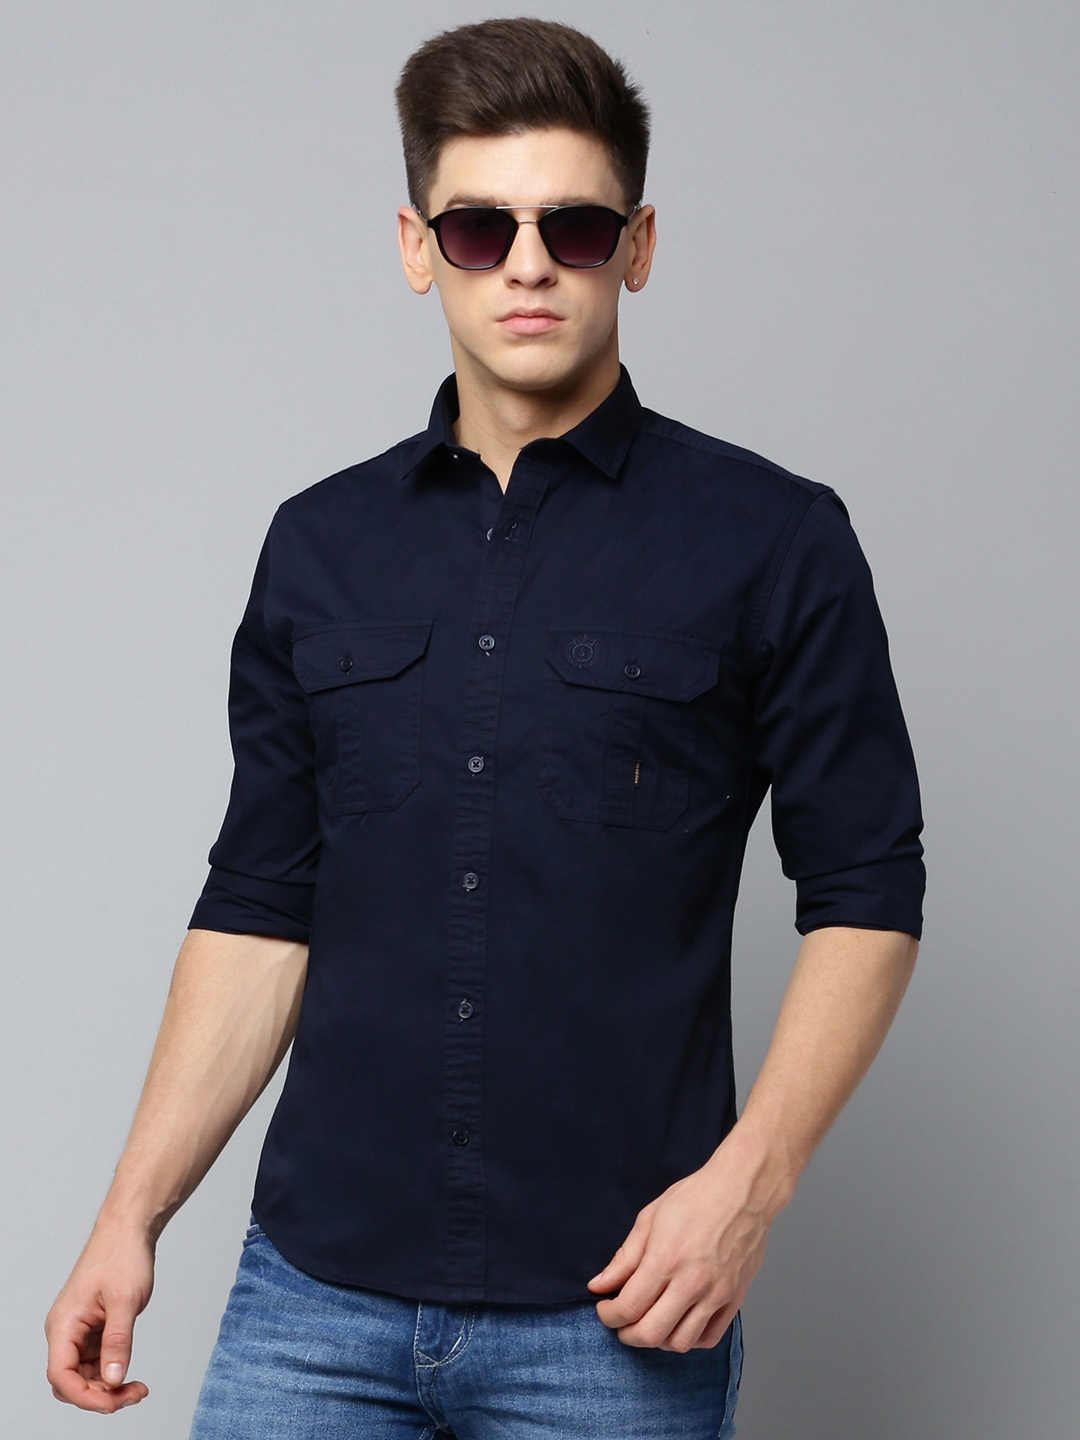 SHOWOFF Men's Spread Collar Solid Navy Blue Regular Fit Shirt